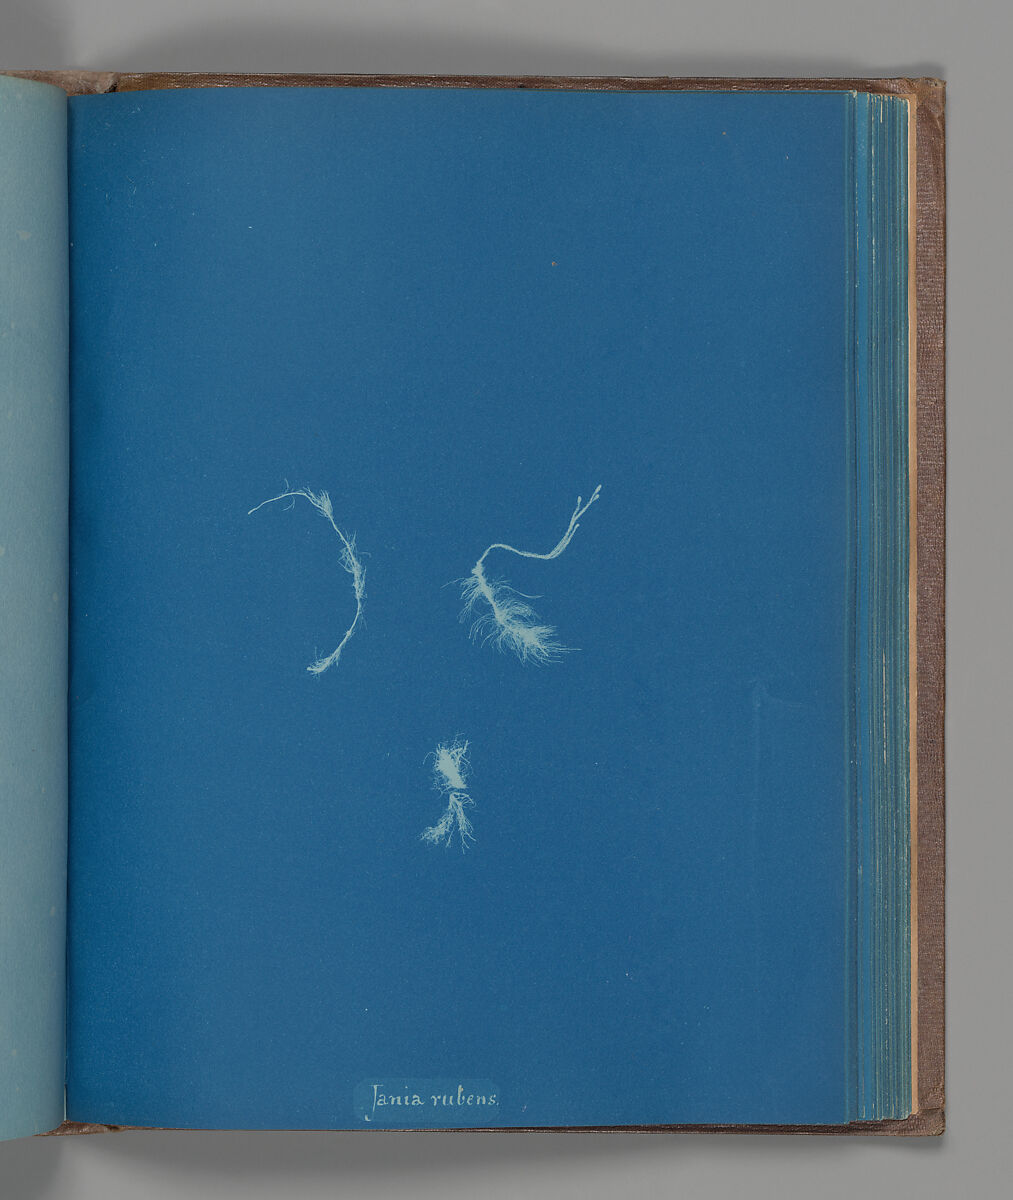 Jania rubens, Anna Atkins (British, 1799–1871), Cyanotype 